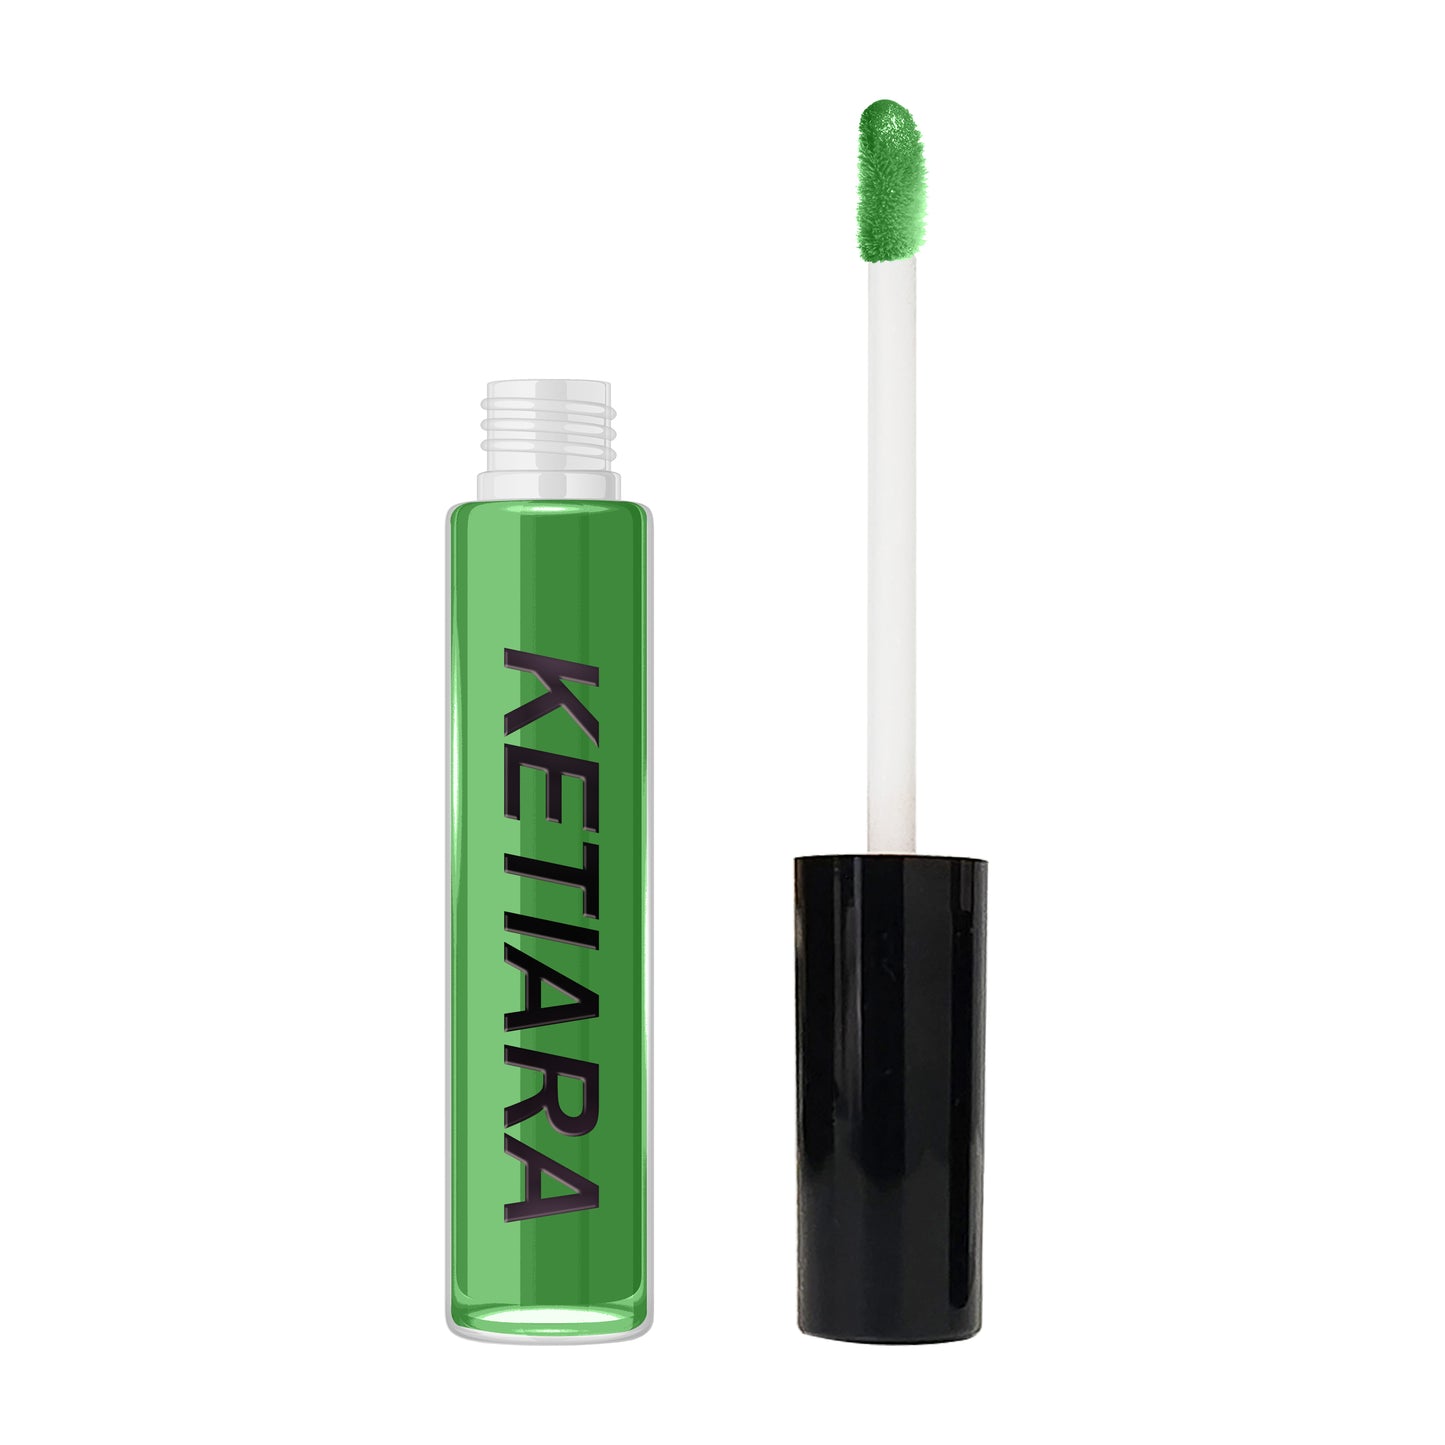 Crunchwrap 10ml Premium Lip Gloss Infused With Hyaluronic Acid